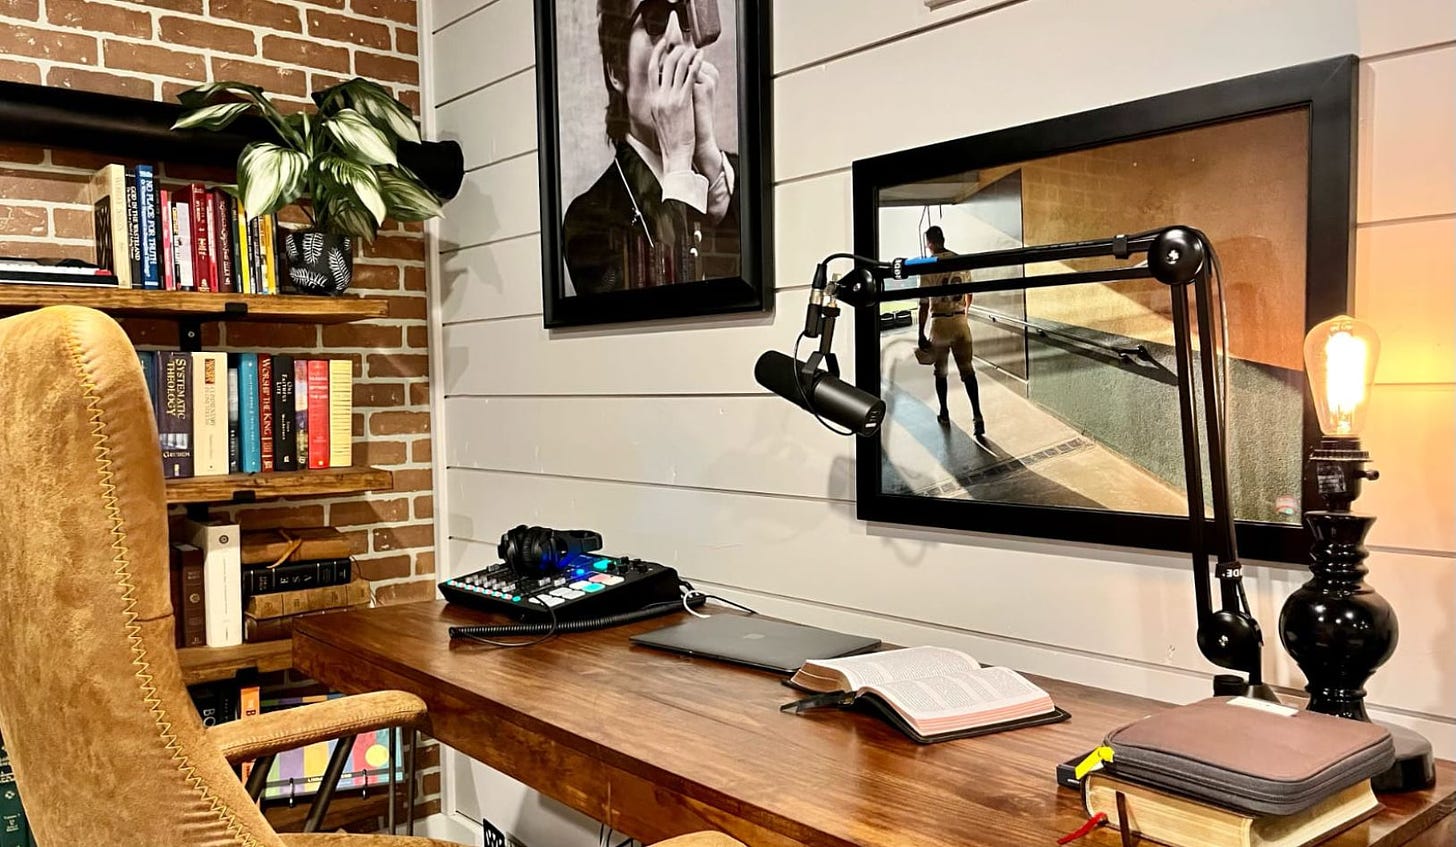 Jeremy Sarber's office and studio